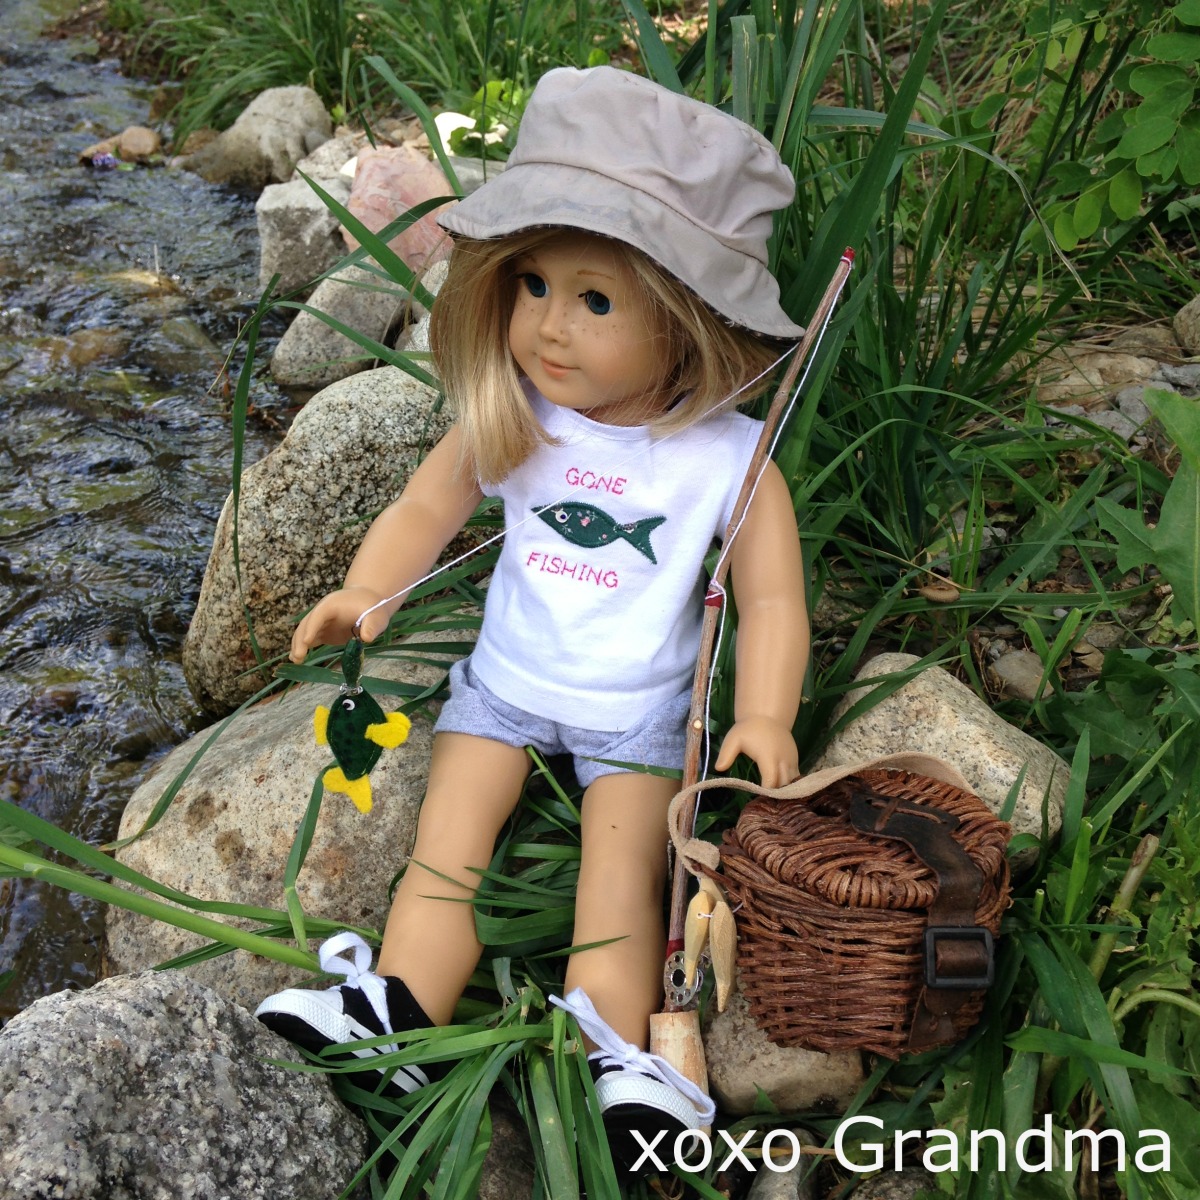 xoxo Grandma: Gone Fishing Outfit & Accessories - American Girl